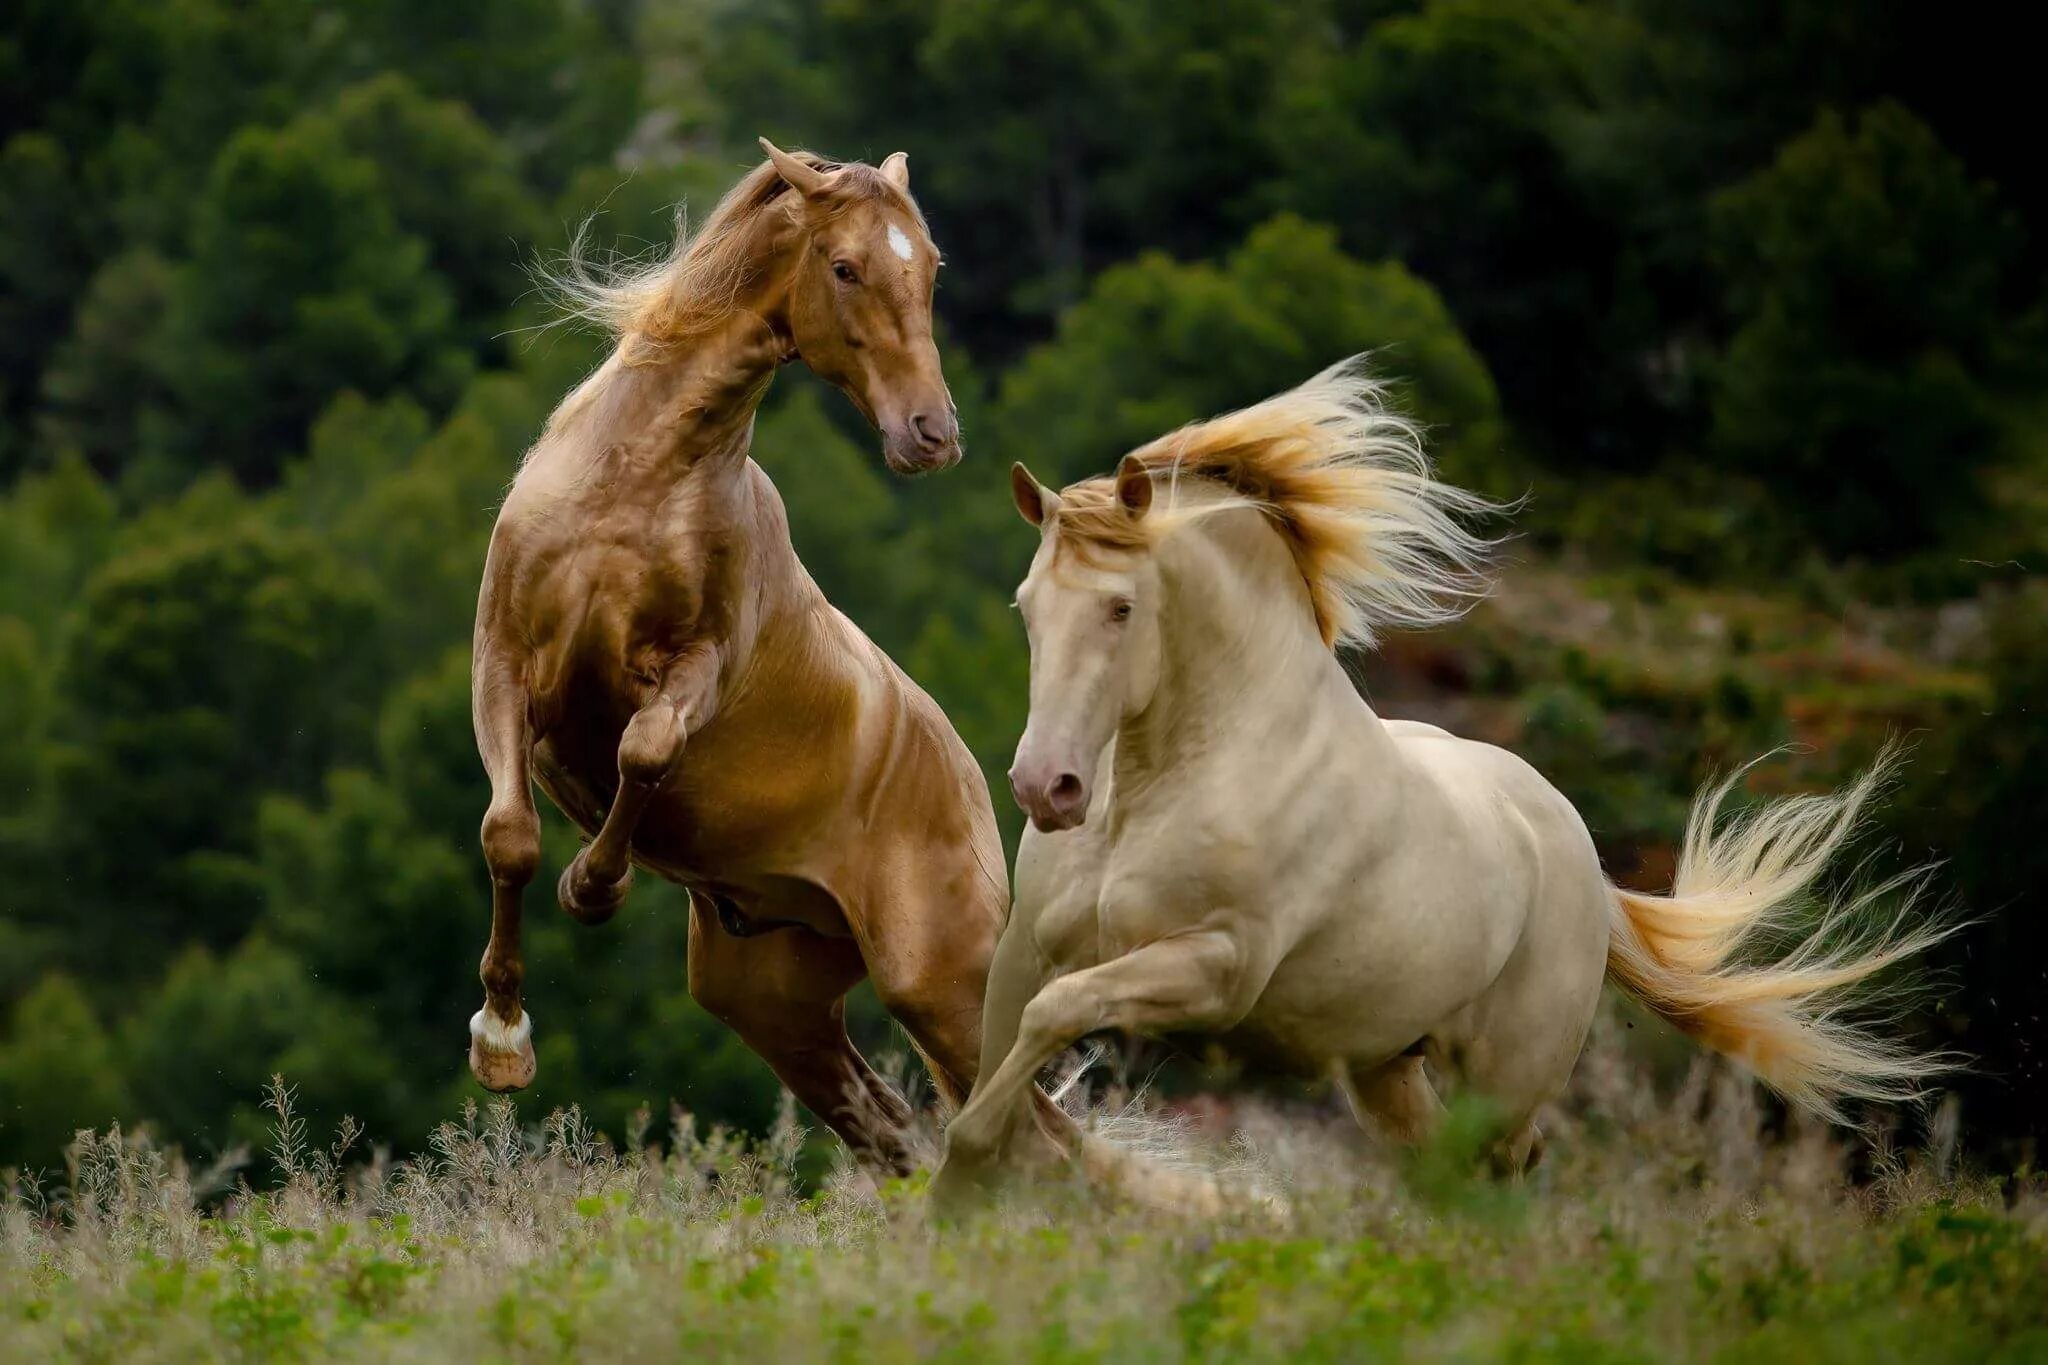 Horses are beautiful. Две лошади. Красивые лошади. Пара лошадей. Красивые лошади на природе.